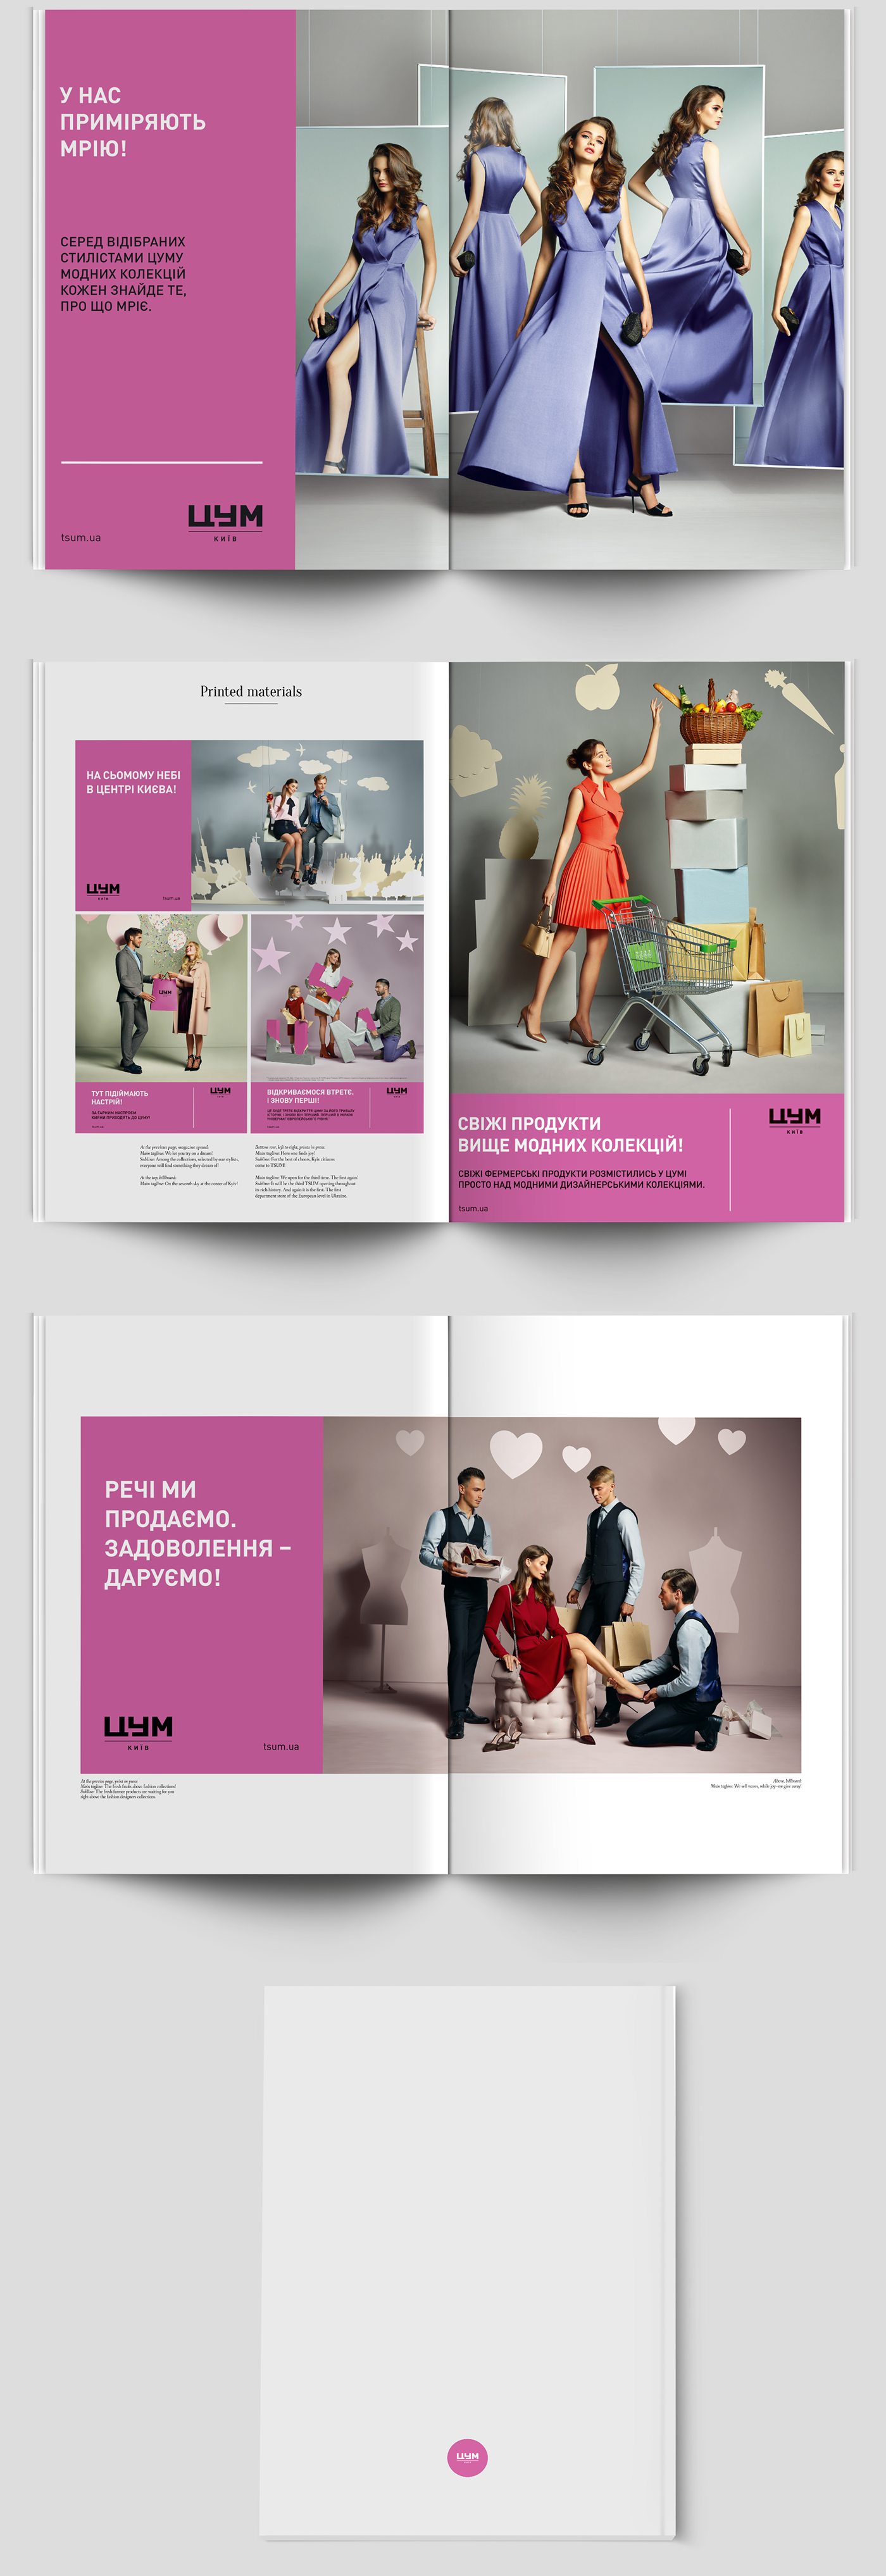 tsum Advertising  ukraine art-direction Photography  copywriting  campaign provid